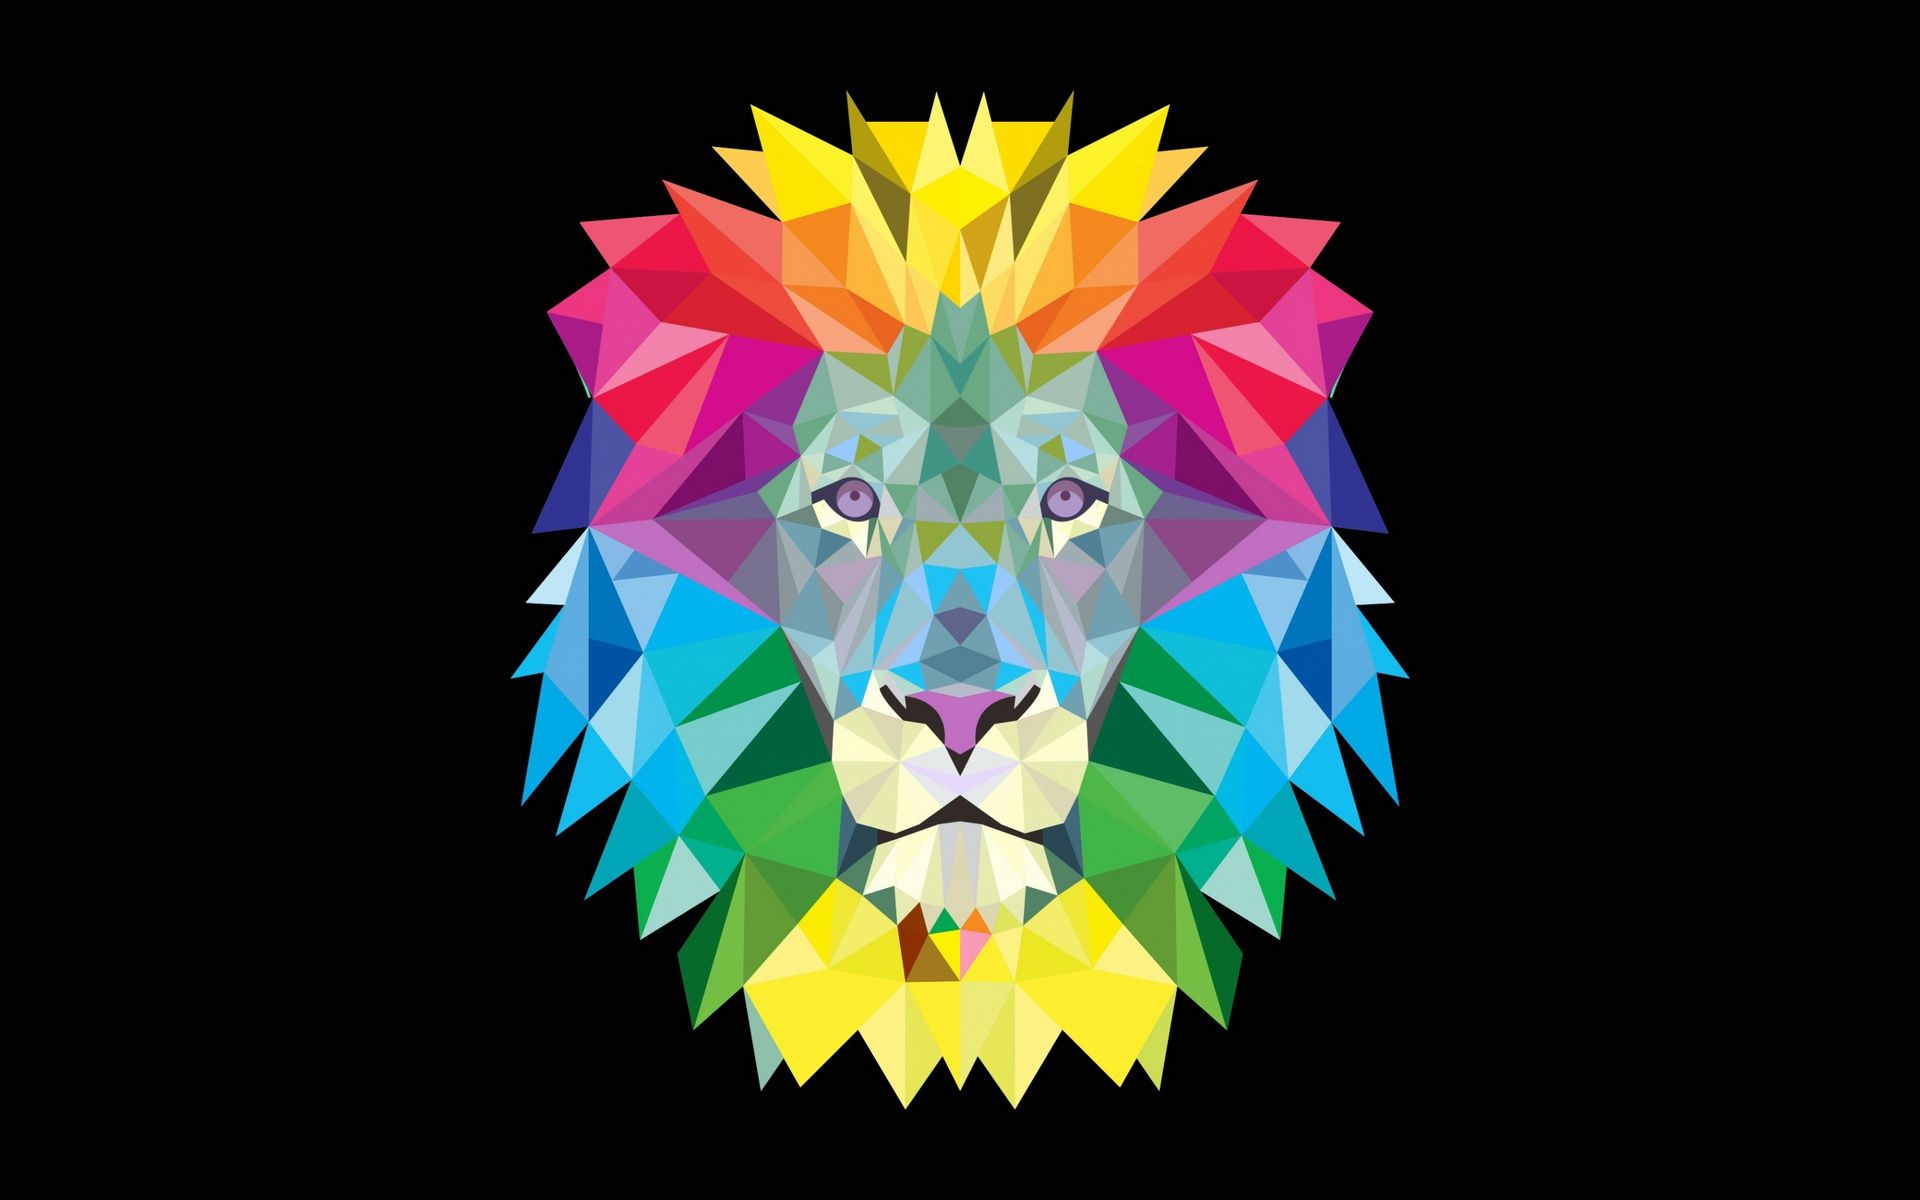 Colorful Geometric Lion wallpaper. Colorful Geometric Lion stock